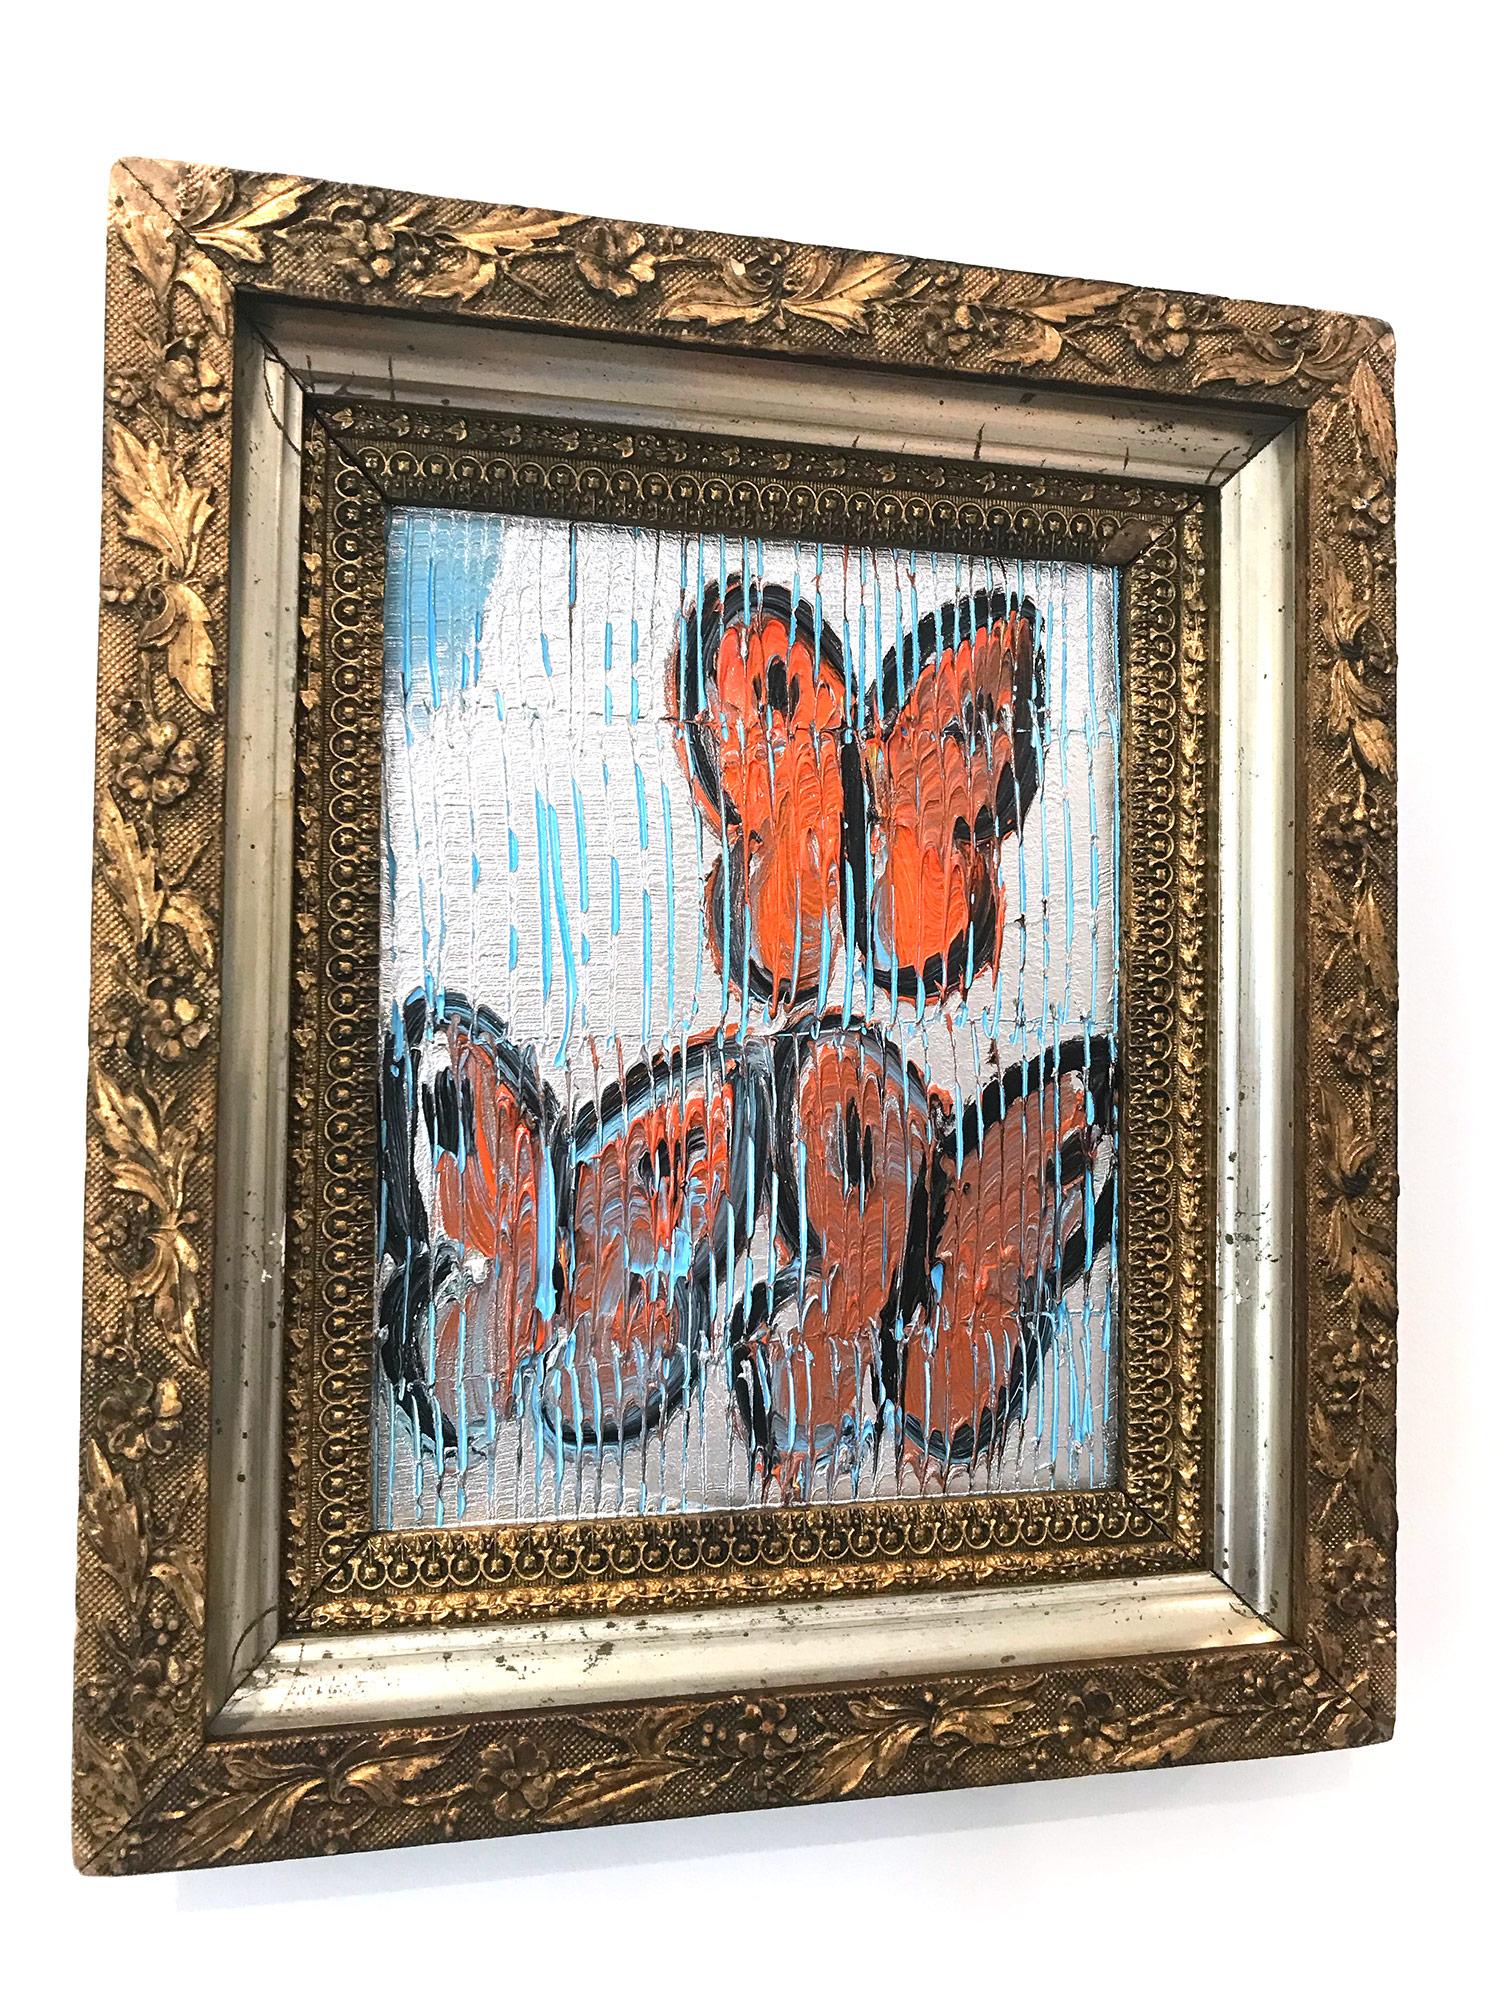 Untitled (Orange Butterflies on Silver Background Scoring) Oil on Wood Panel 2